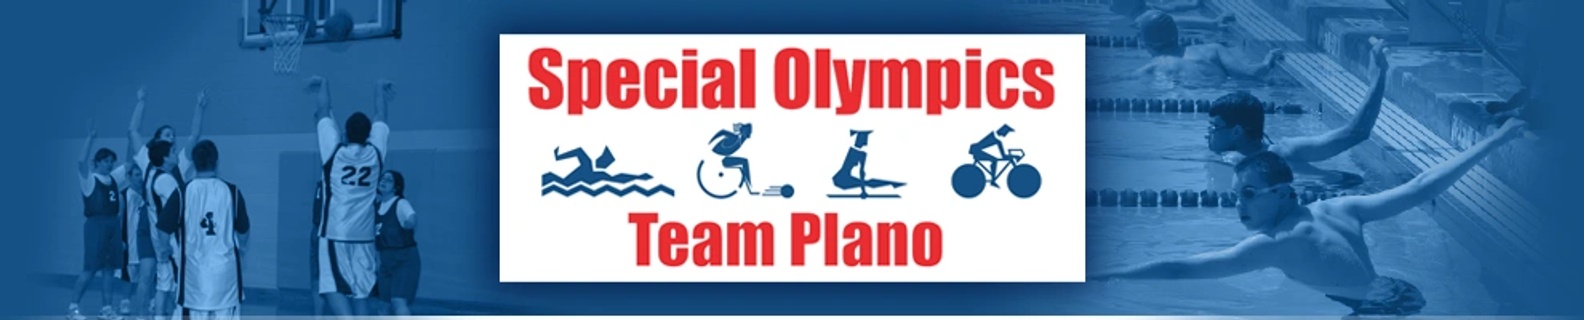 Special Olympics Team Plano